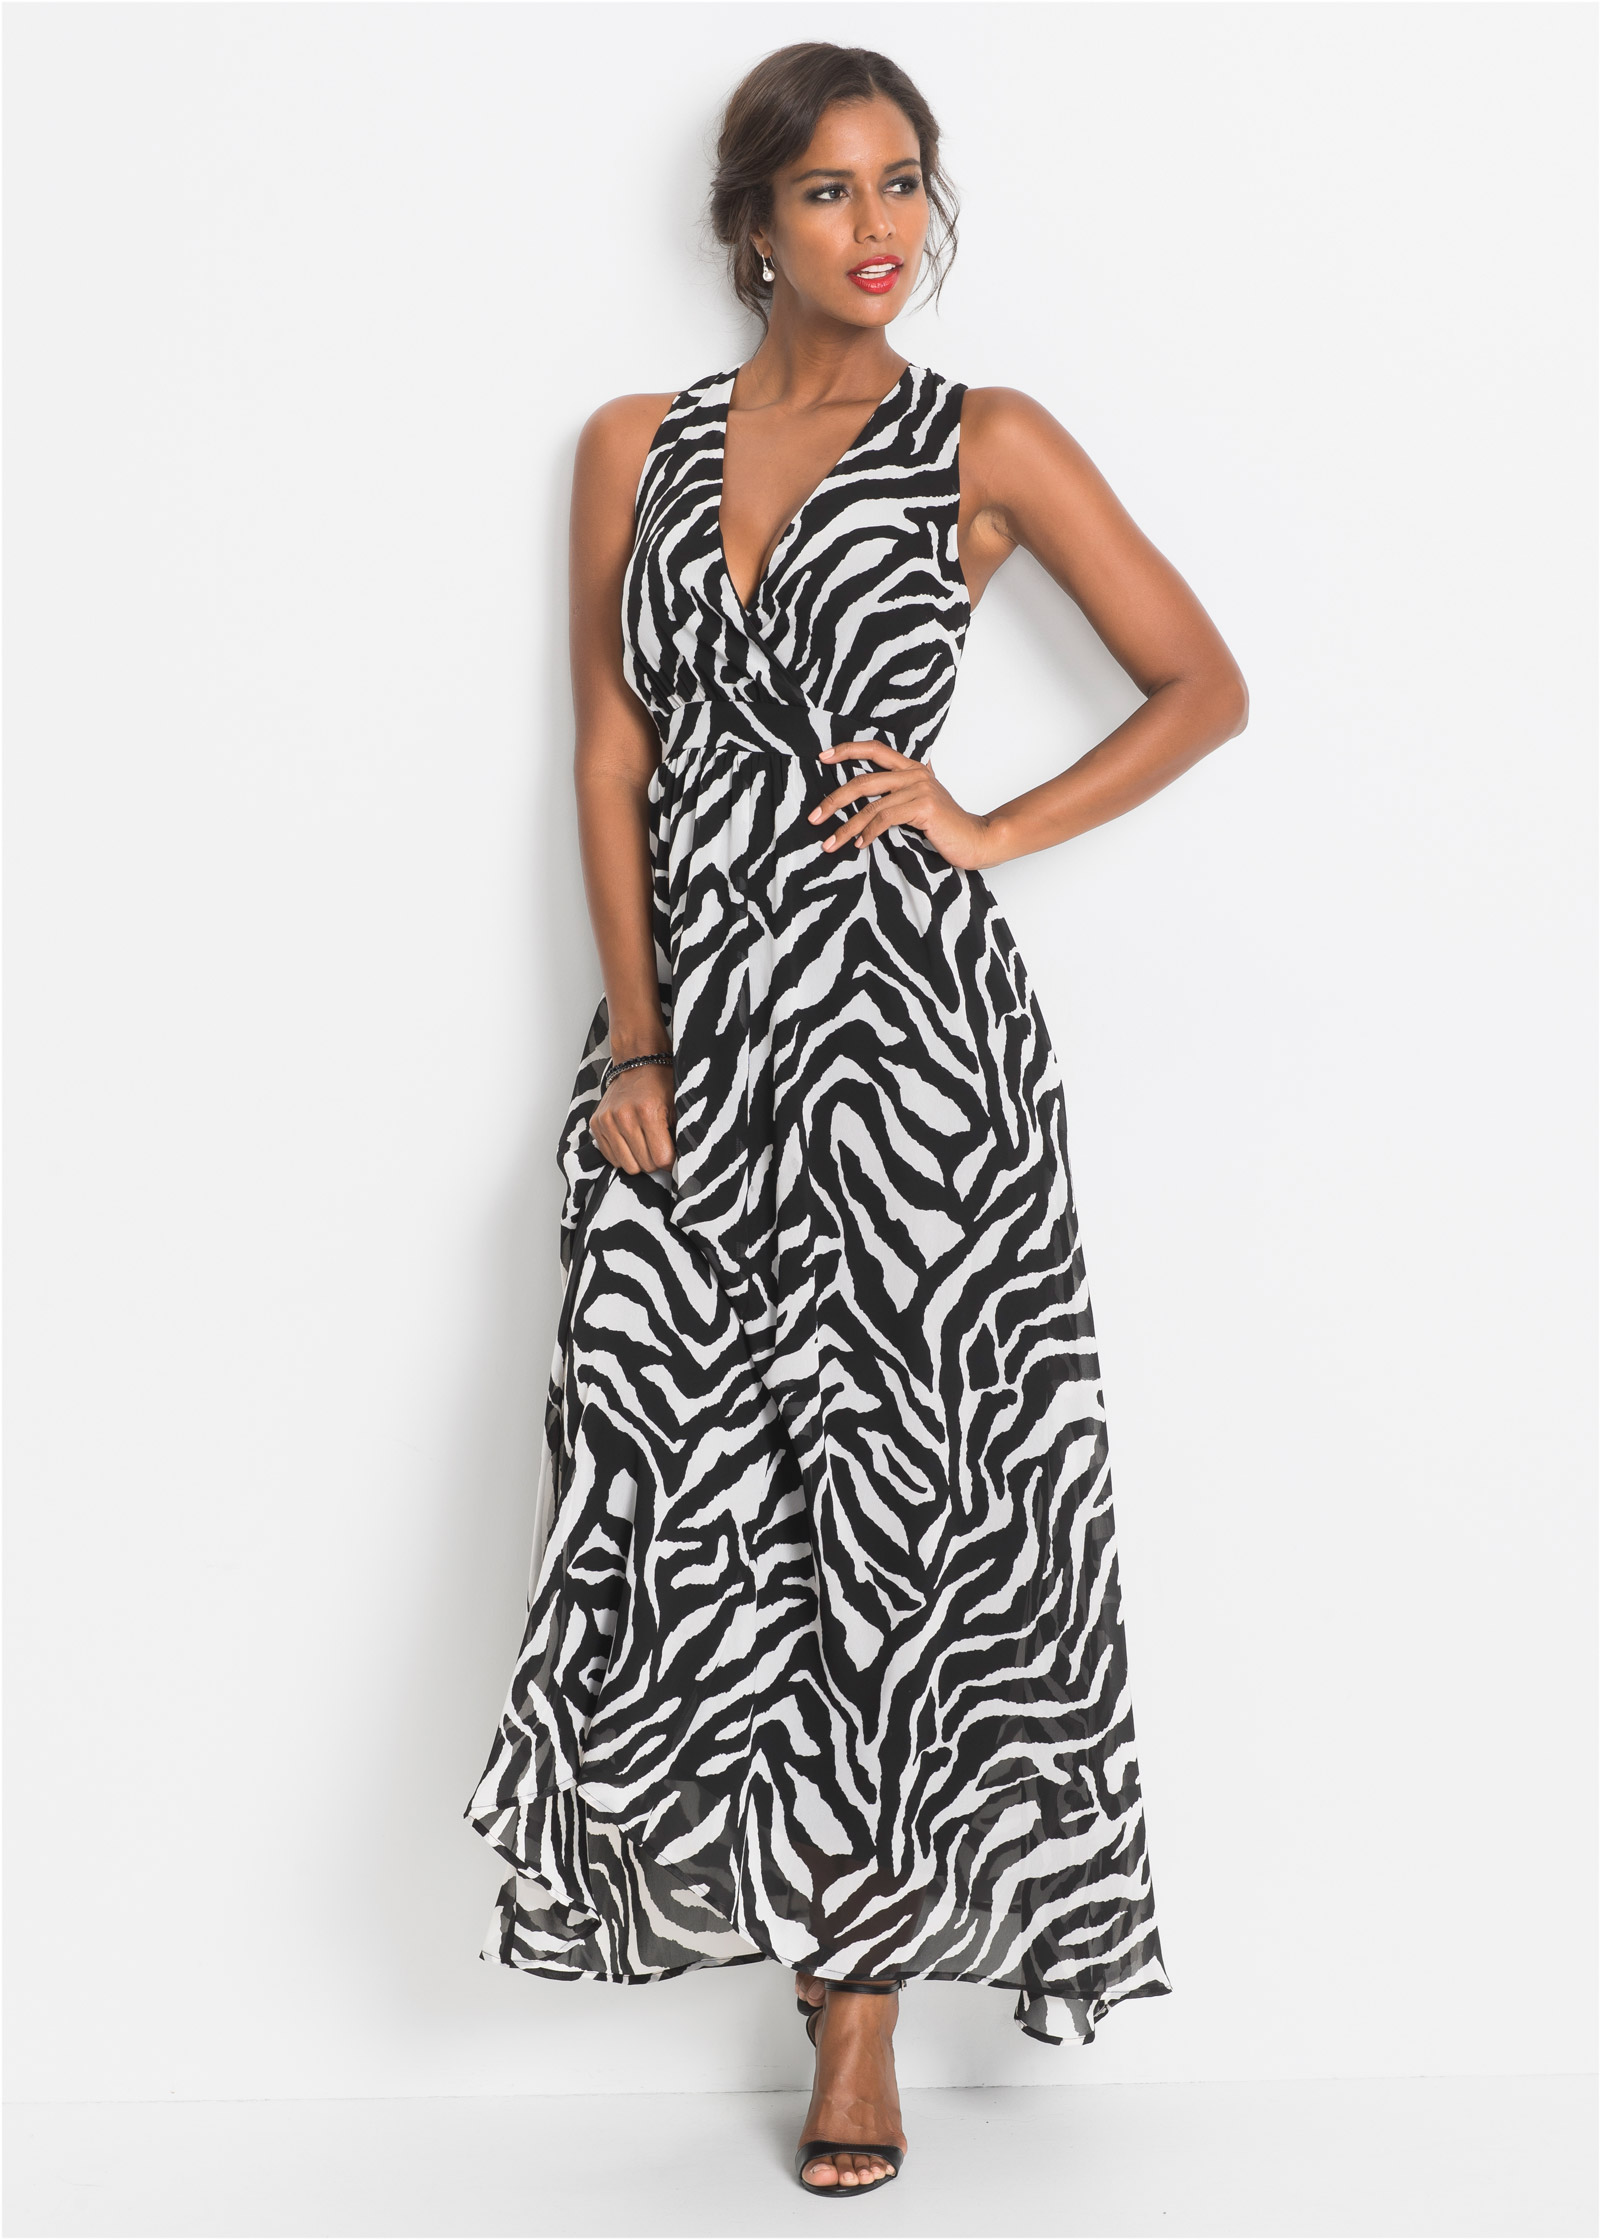 zebra print dresses